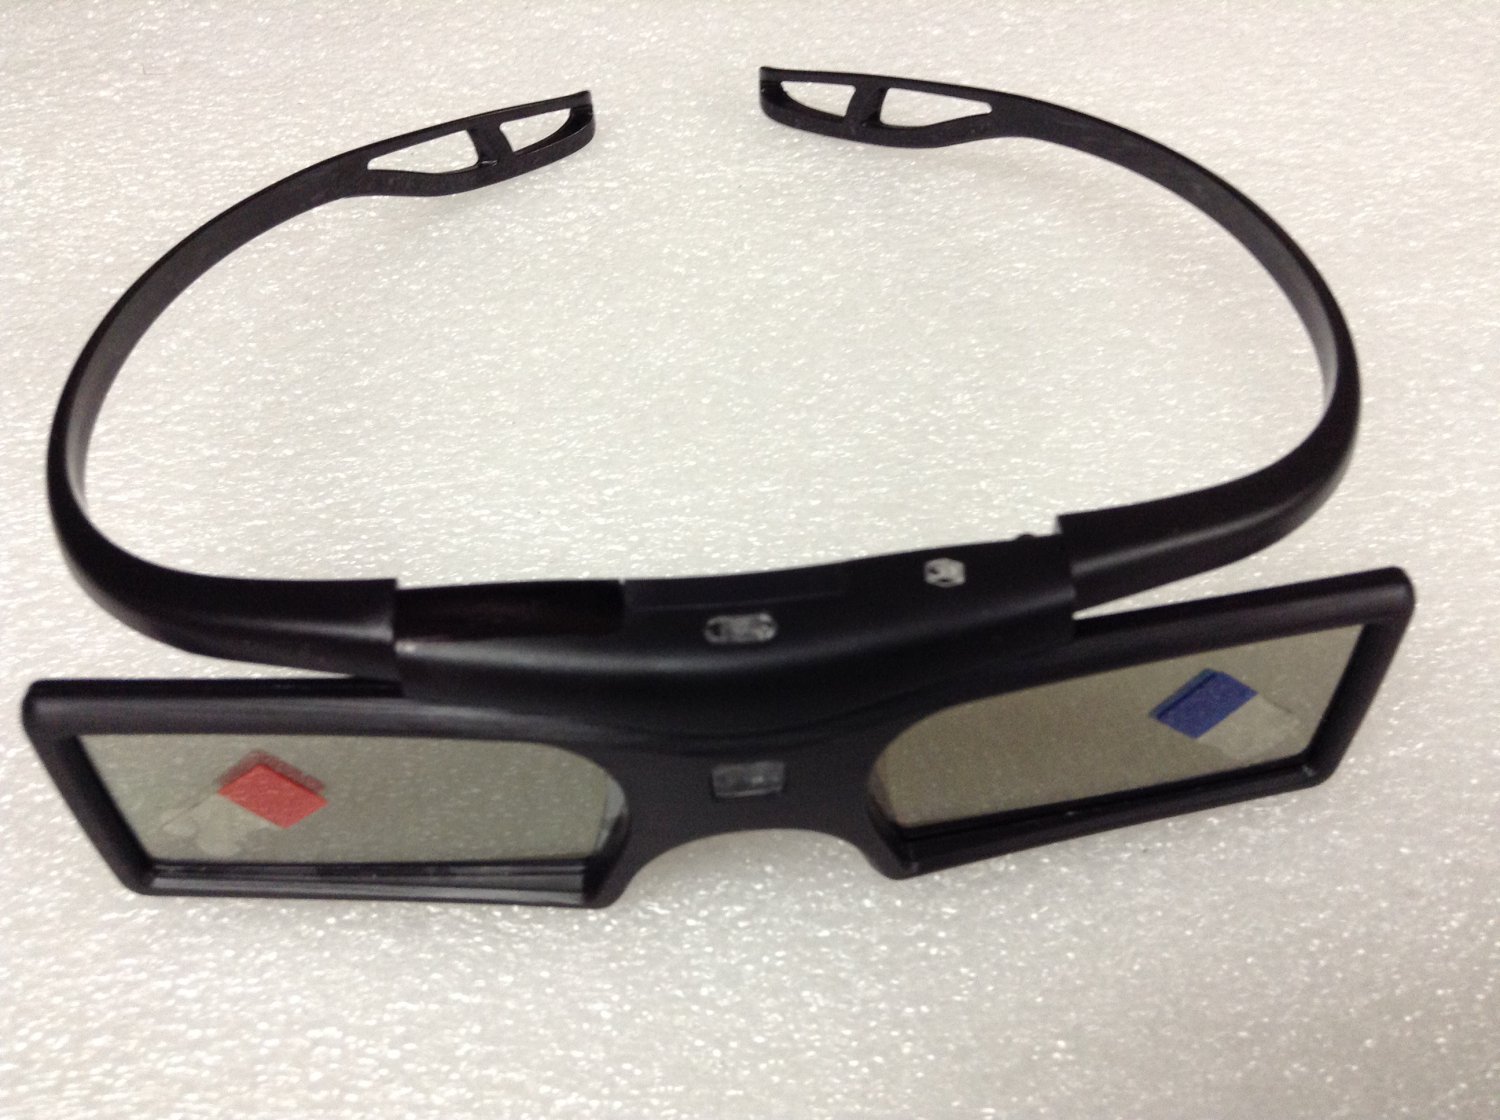 3D ACTIVE SHUTTER GLASSES FOR VIEWSONIC 3D DLP-Link PROJECTOR